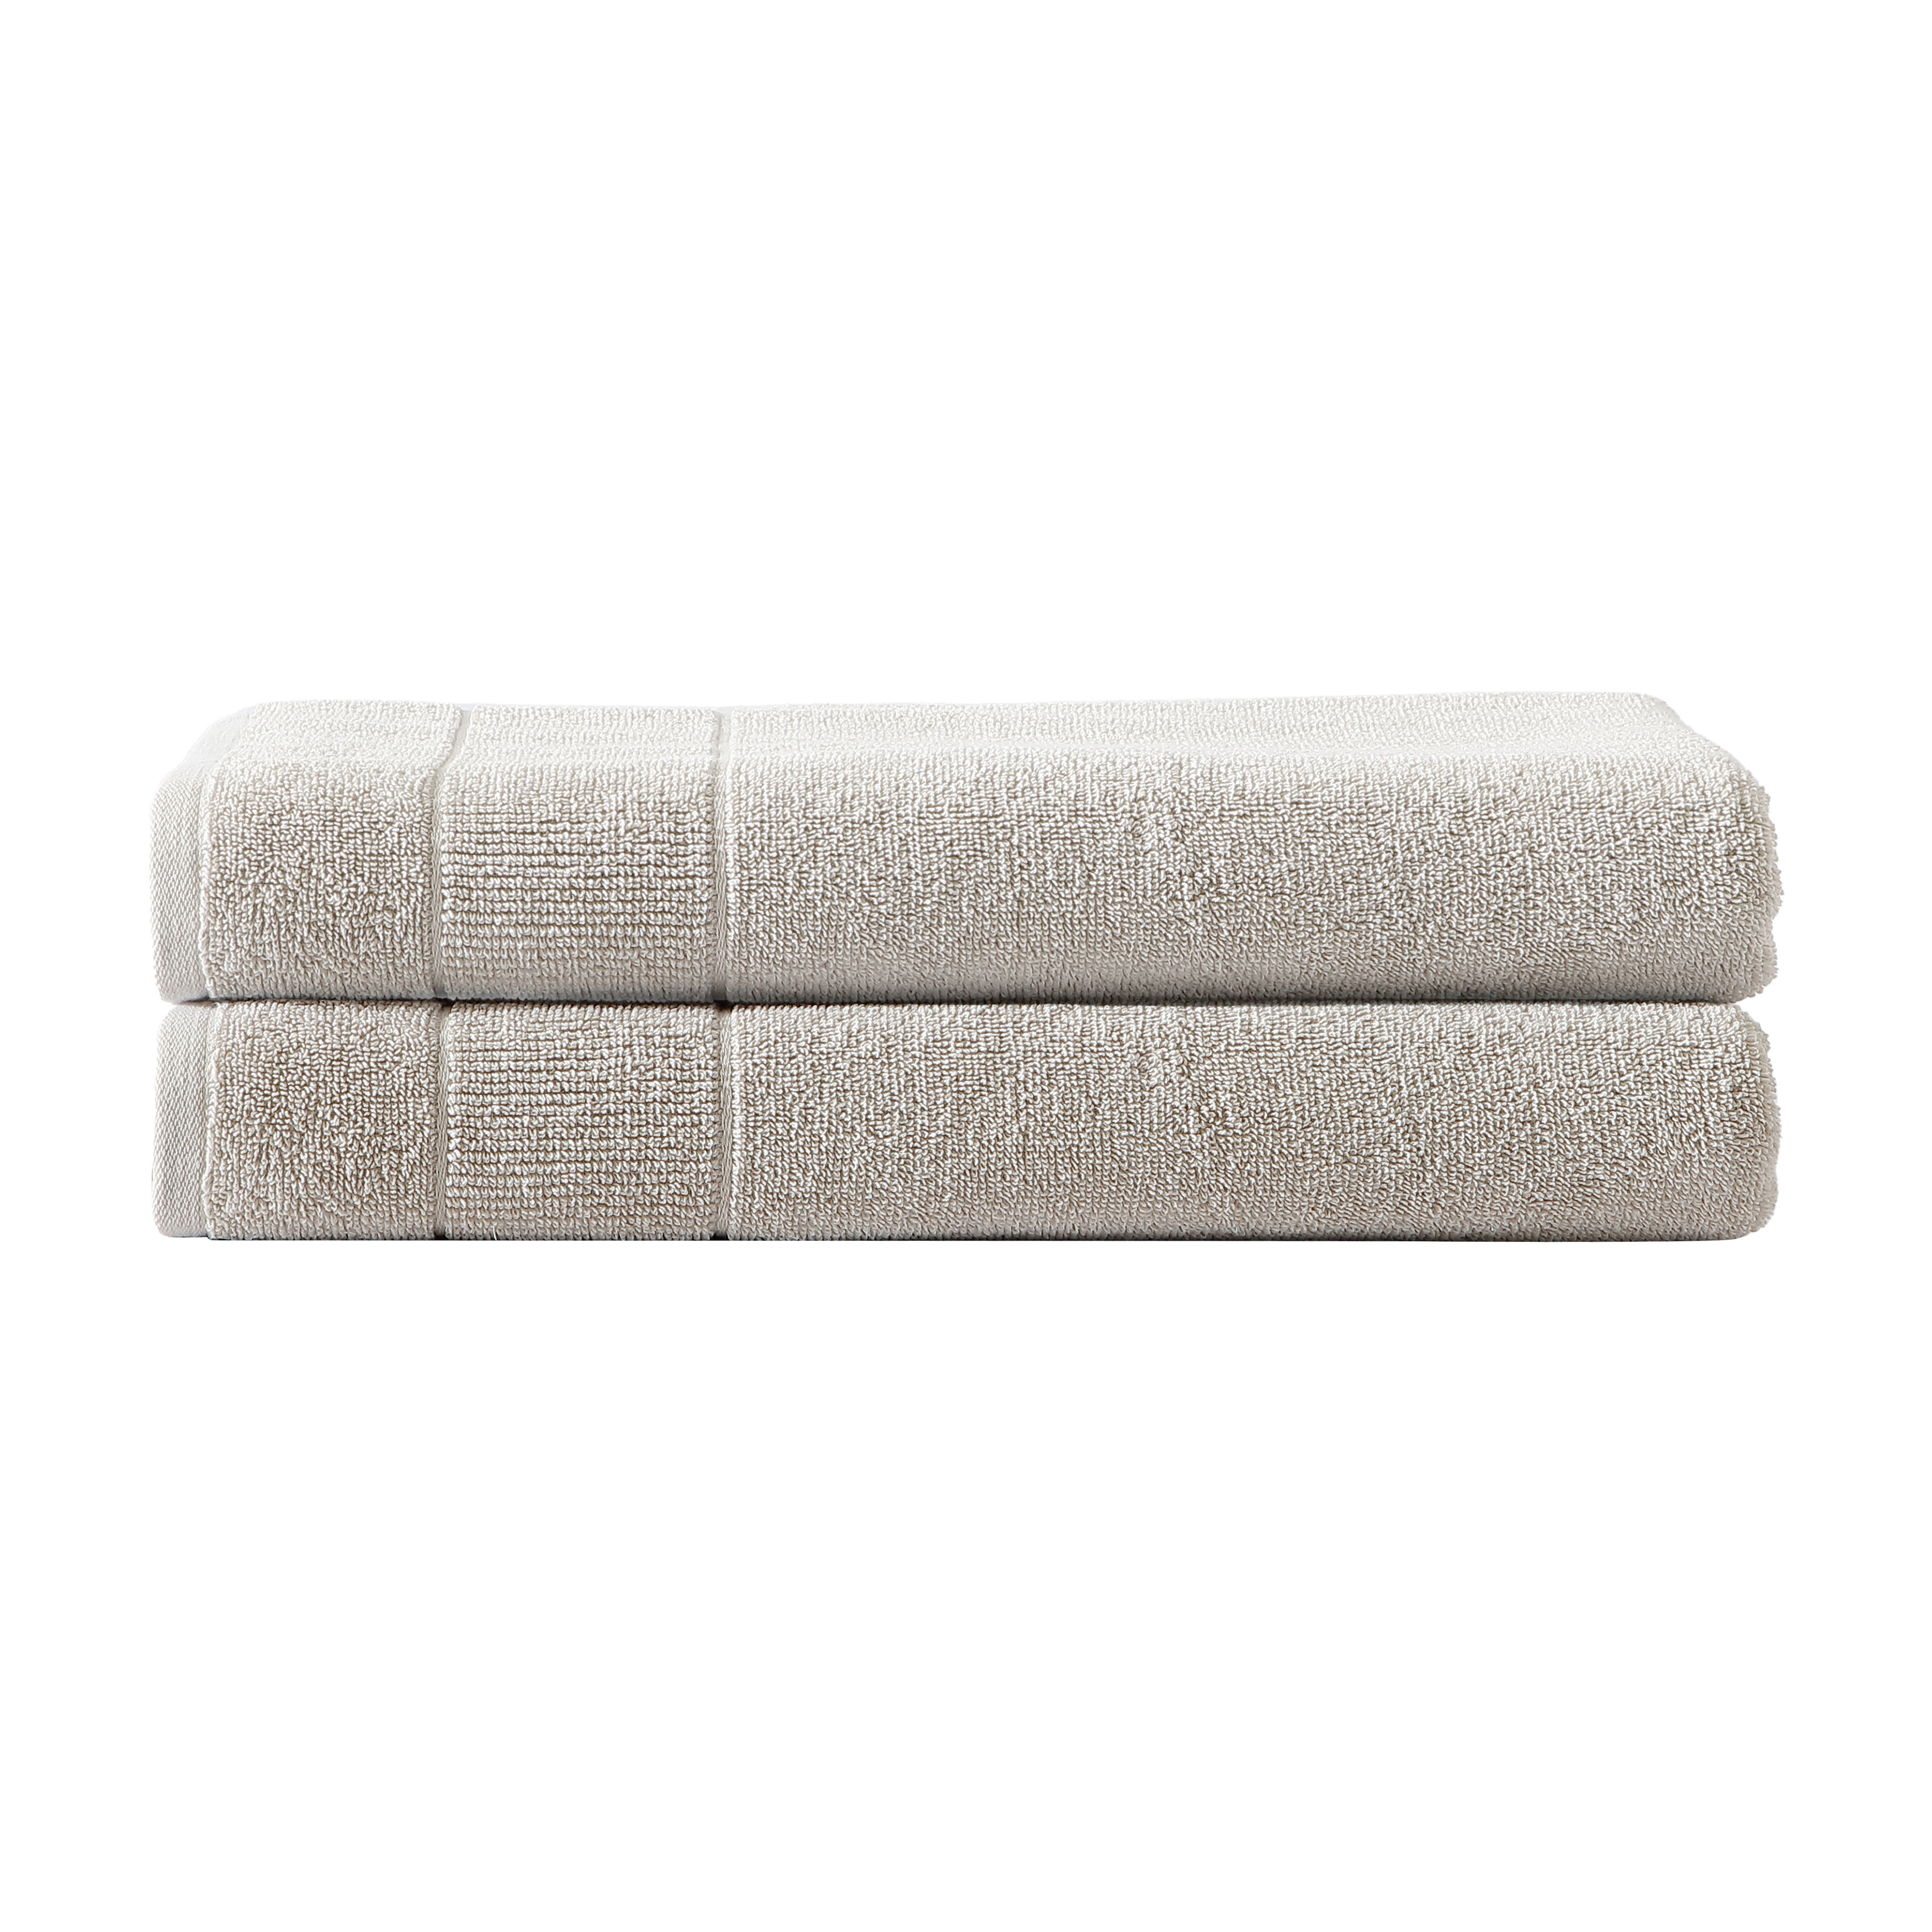 American Bath Towels Bath Sheets 40x80 Clearance, 100% Cotton Extra Large  Bath Towel, Oversized Turkish Bath Towel for Bathroom, Light Gray